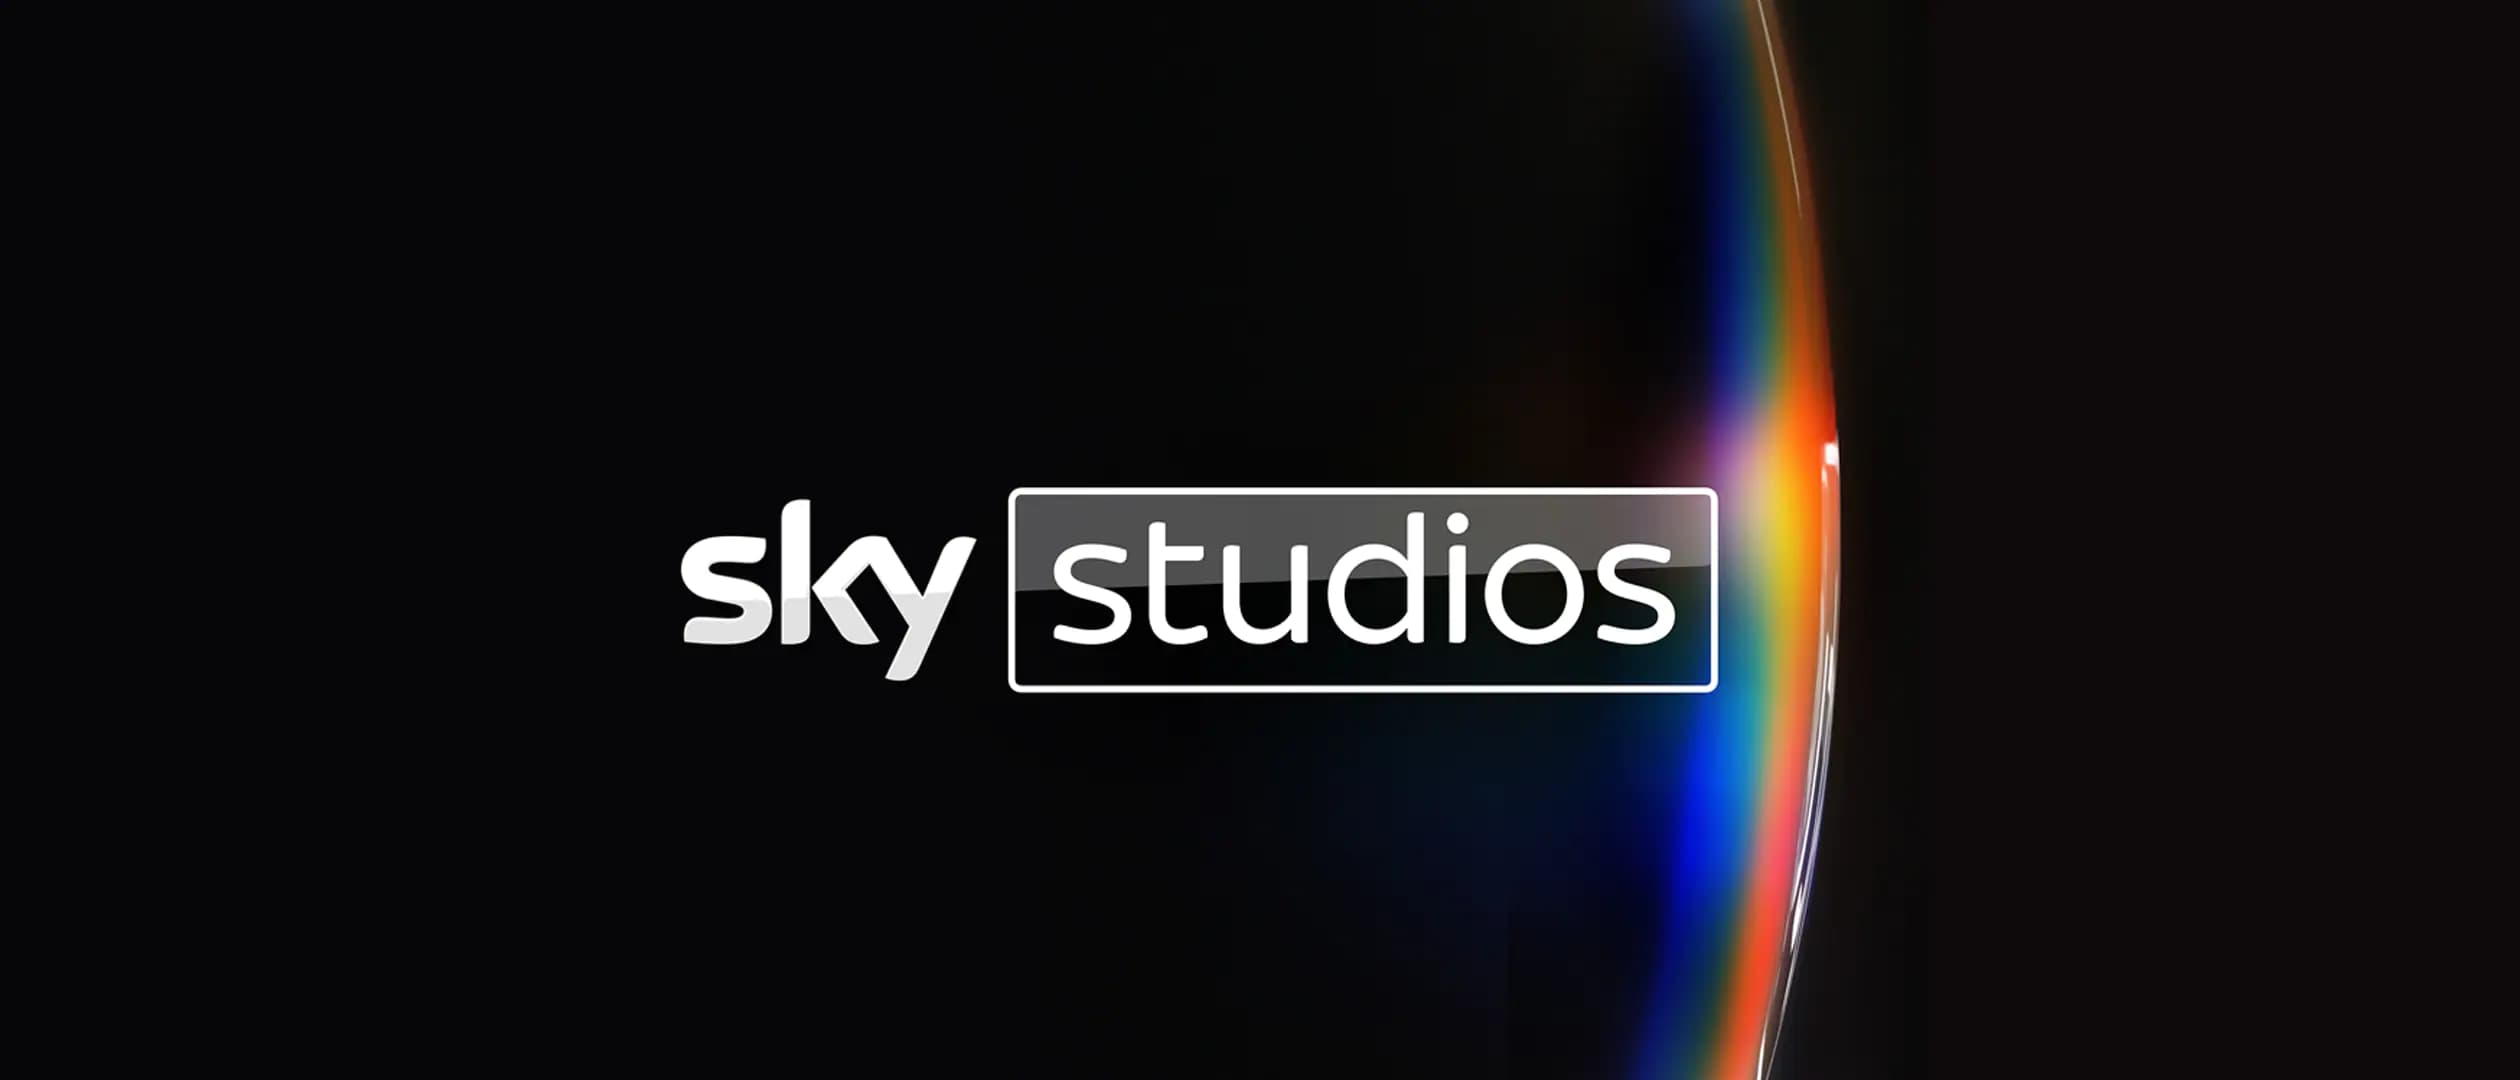 Sky Studios riorganizza il leadership team in Italia - Cinefilos.it